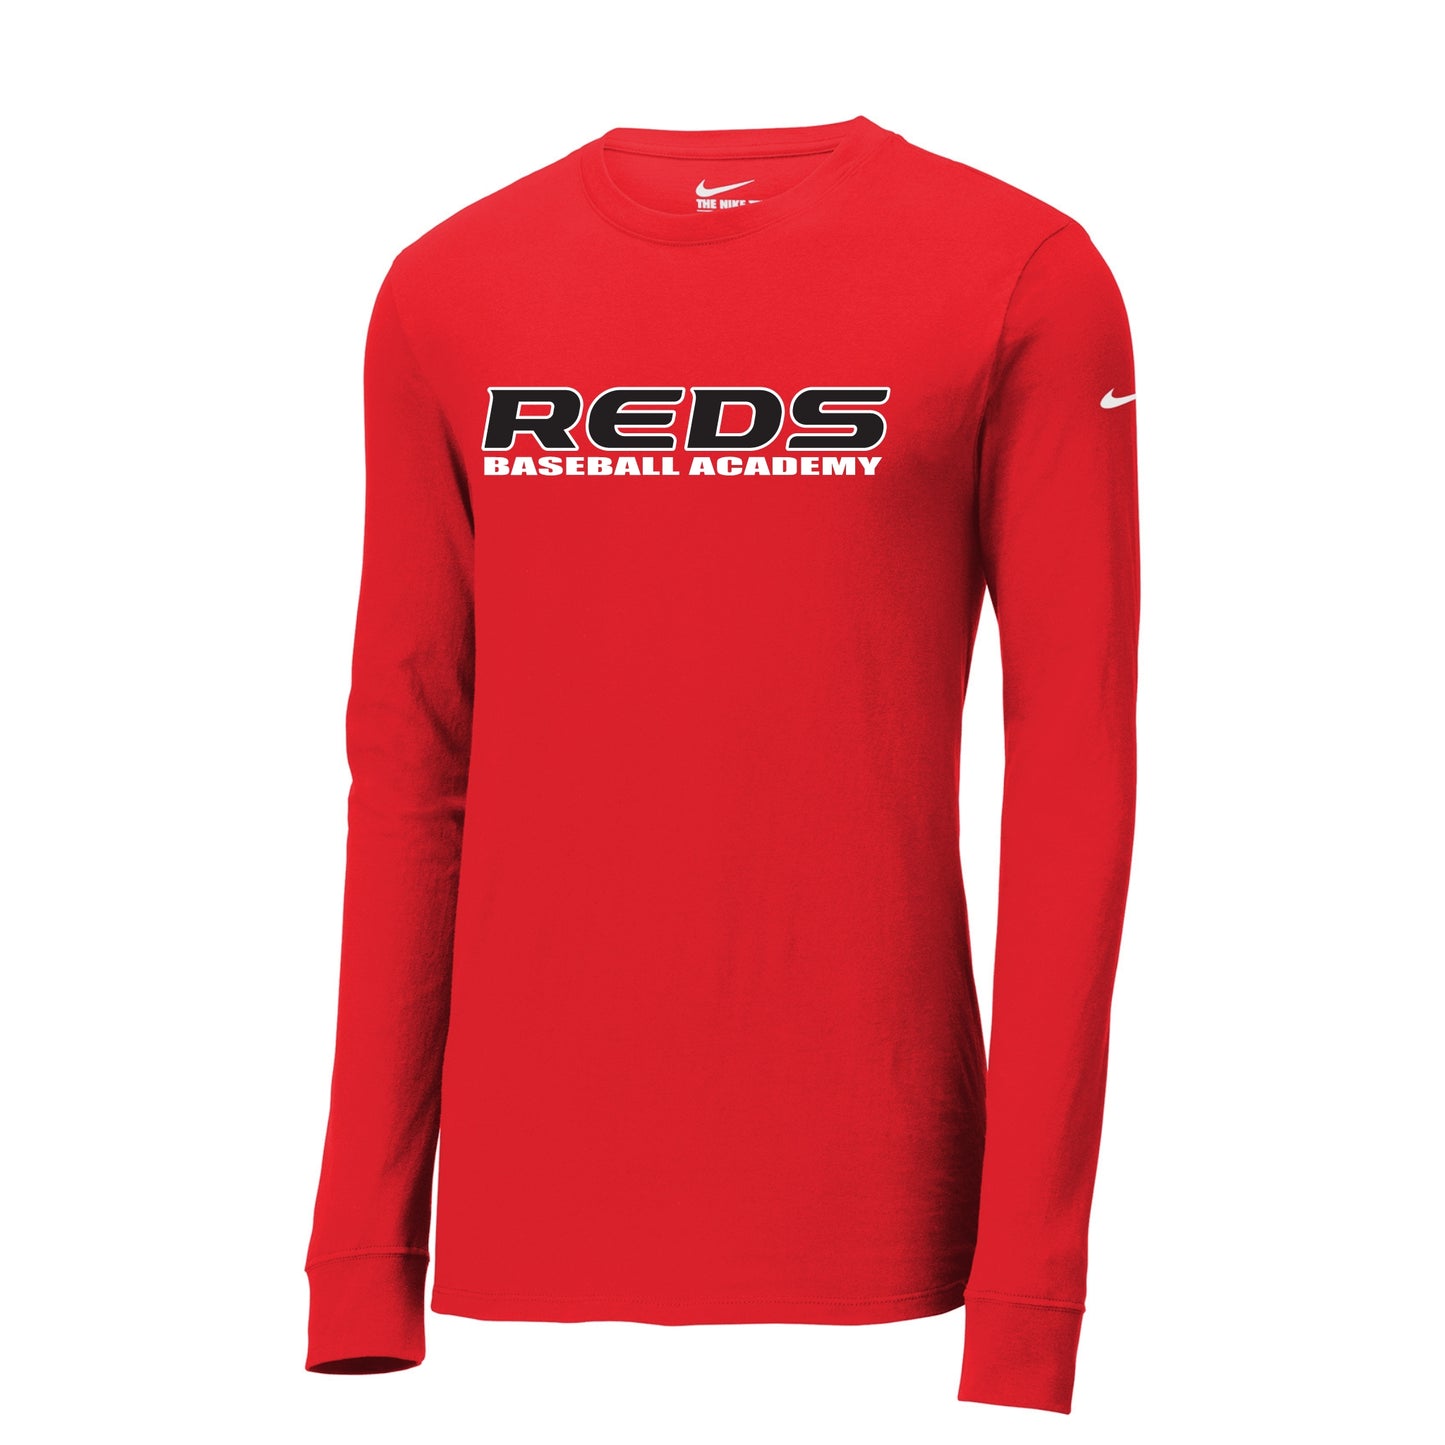 Reds Baseball Academy Nike Cotton/Poly Long Sleeve